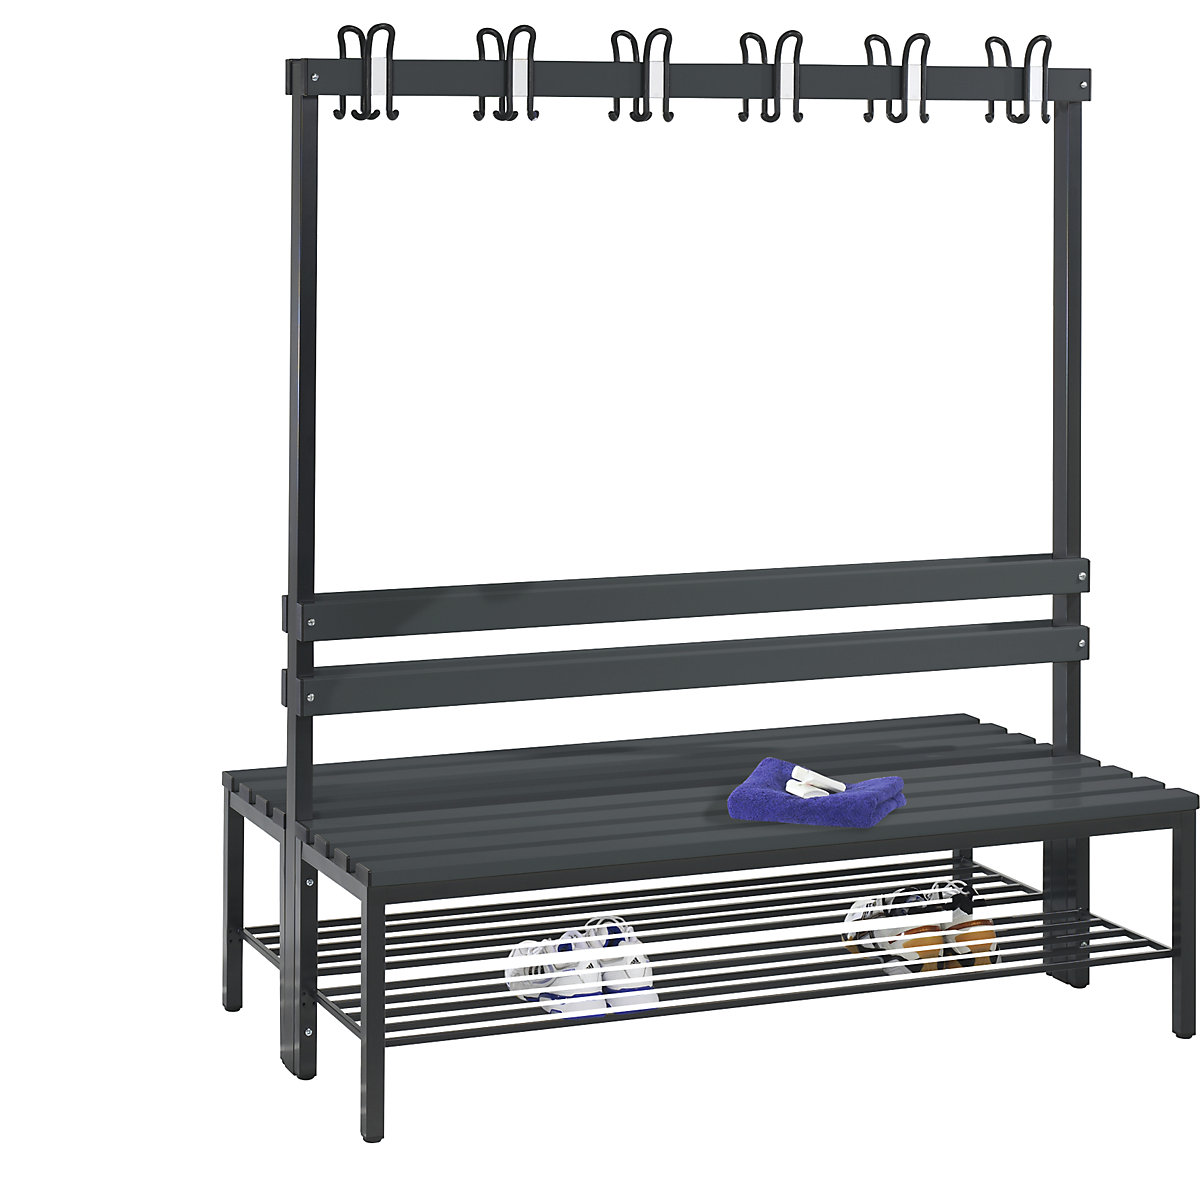 BASIC cloakroom bench, double sided – C+P, hook rail, shoe rack, plastic, length 1500 mm, black grey-4